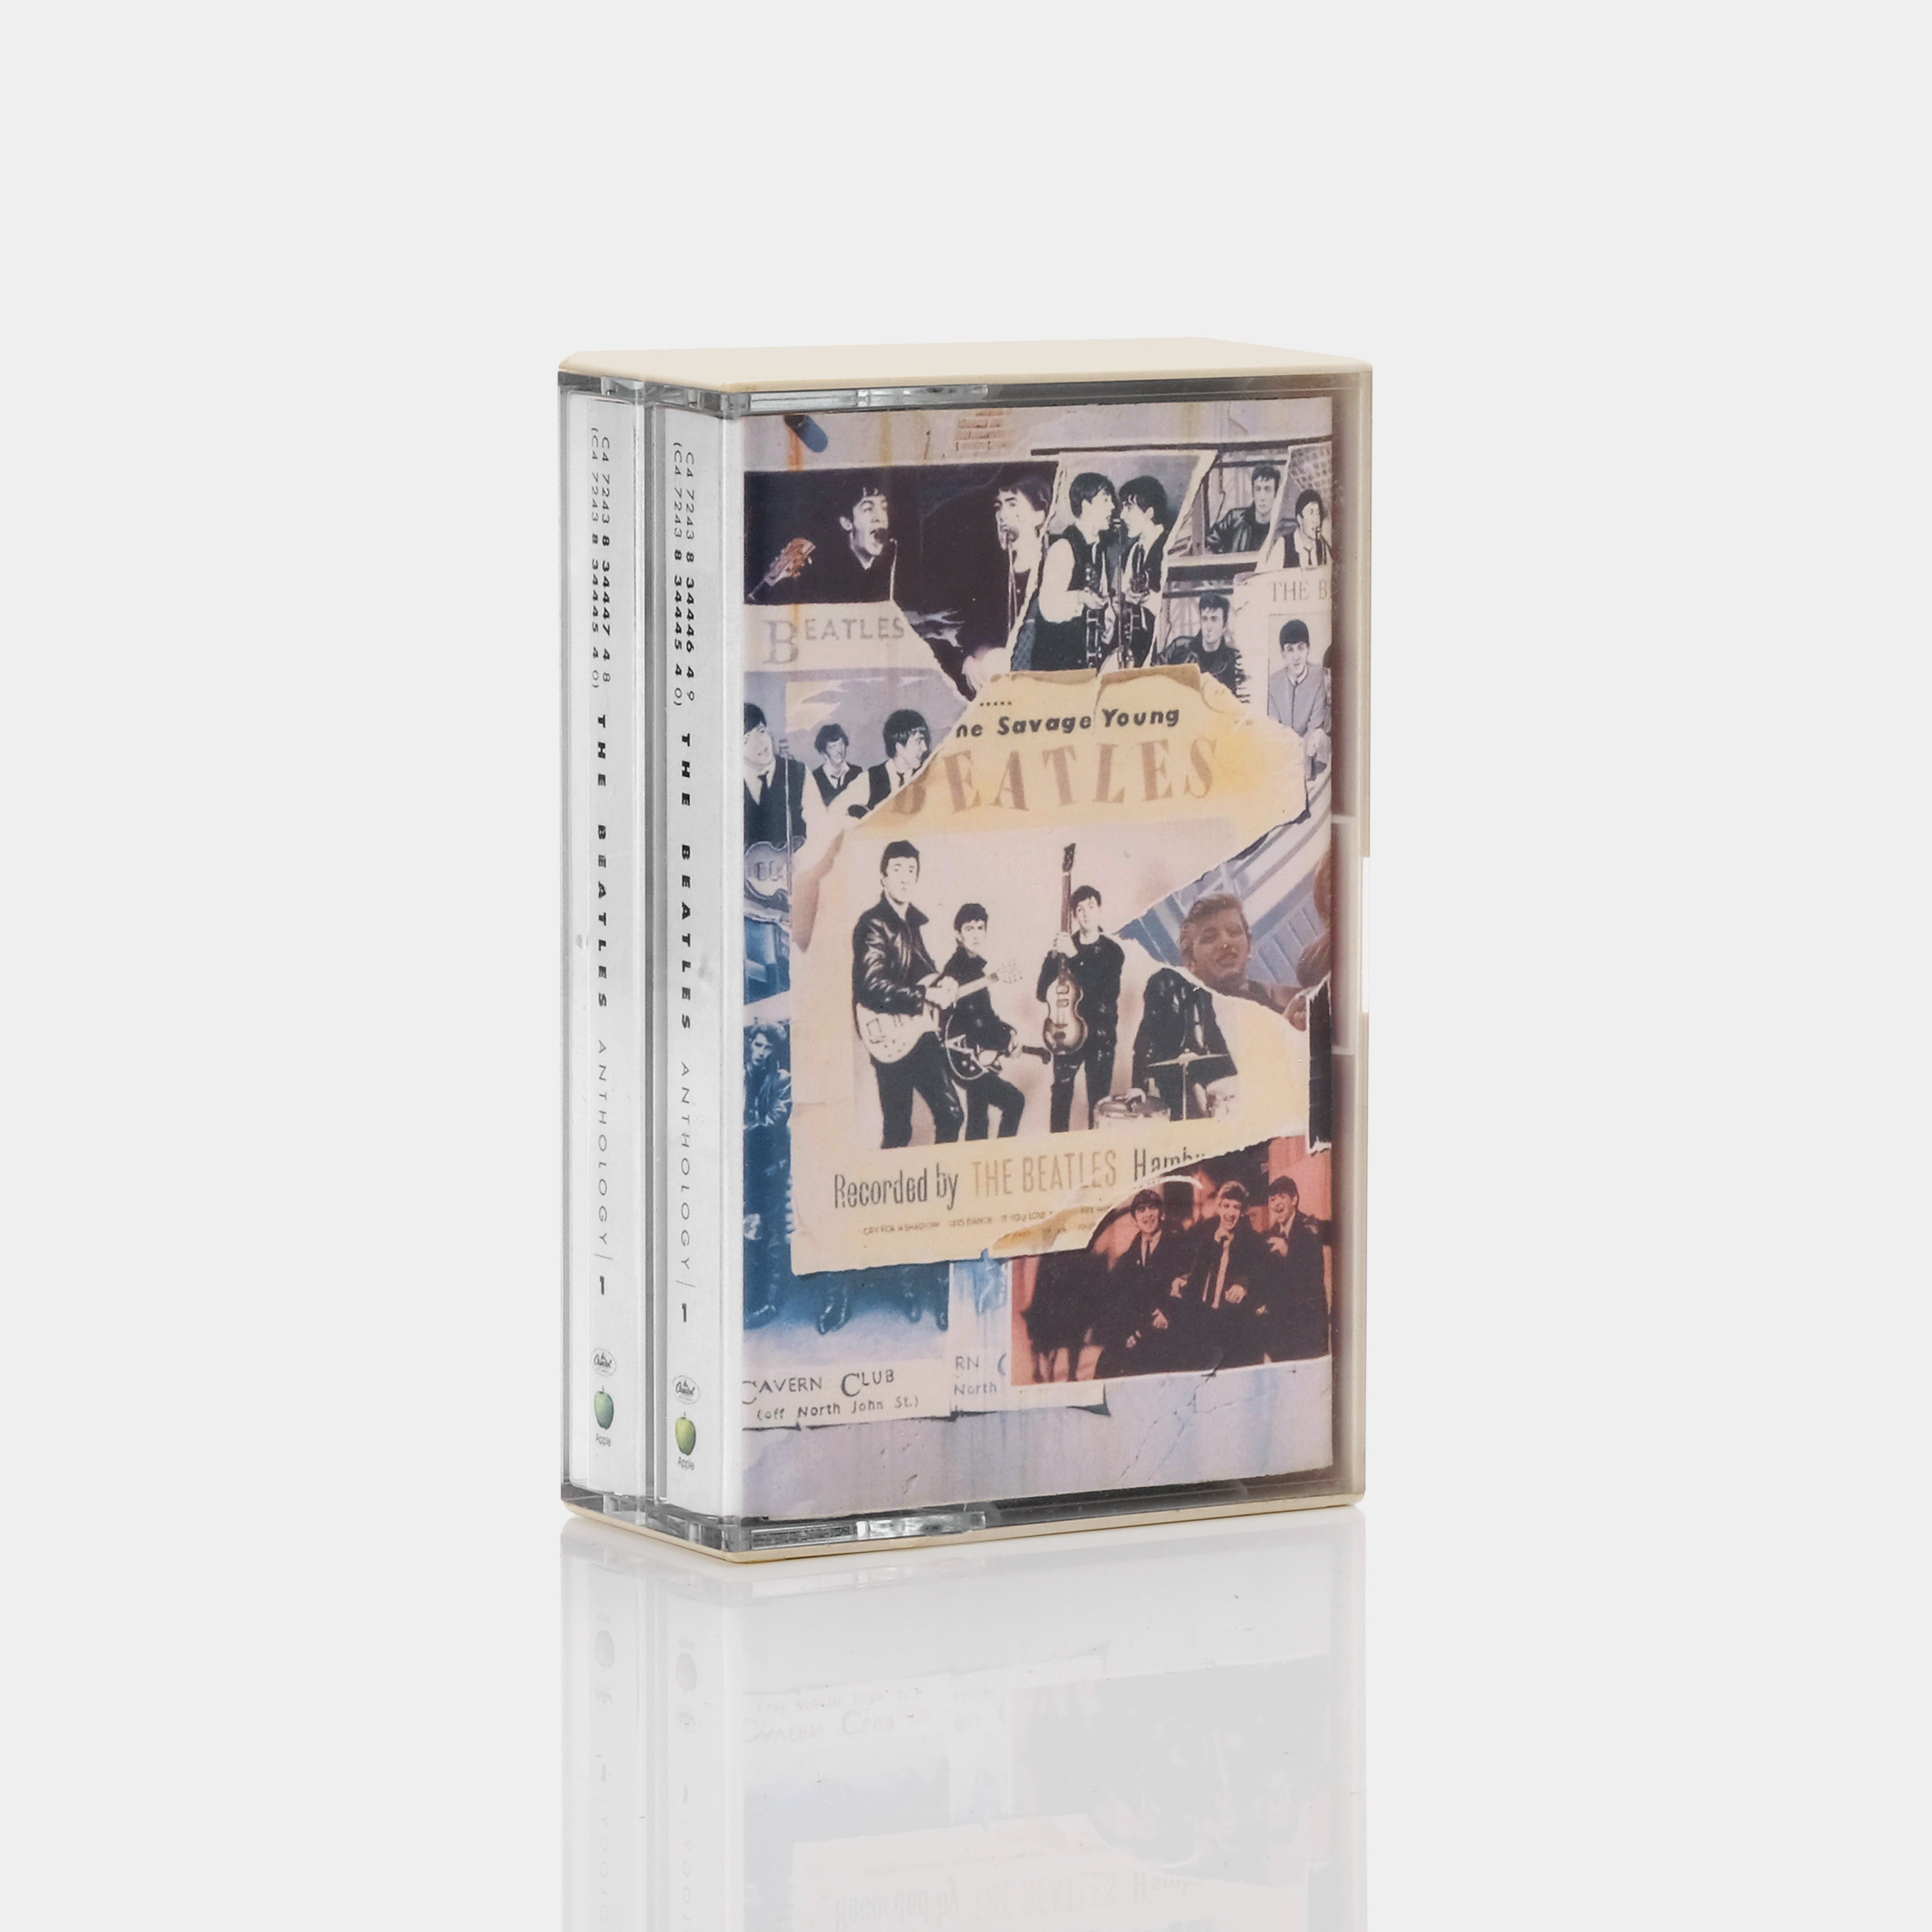 The Beatles - Anthology 1 Cassette Tape Set